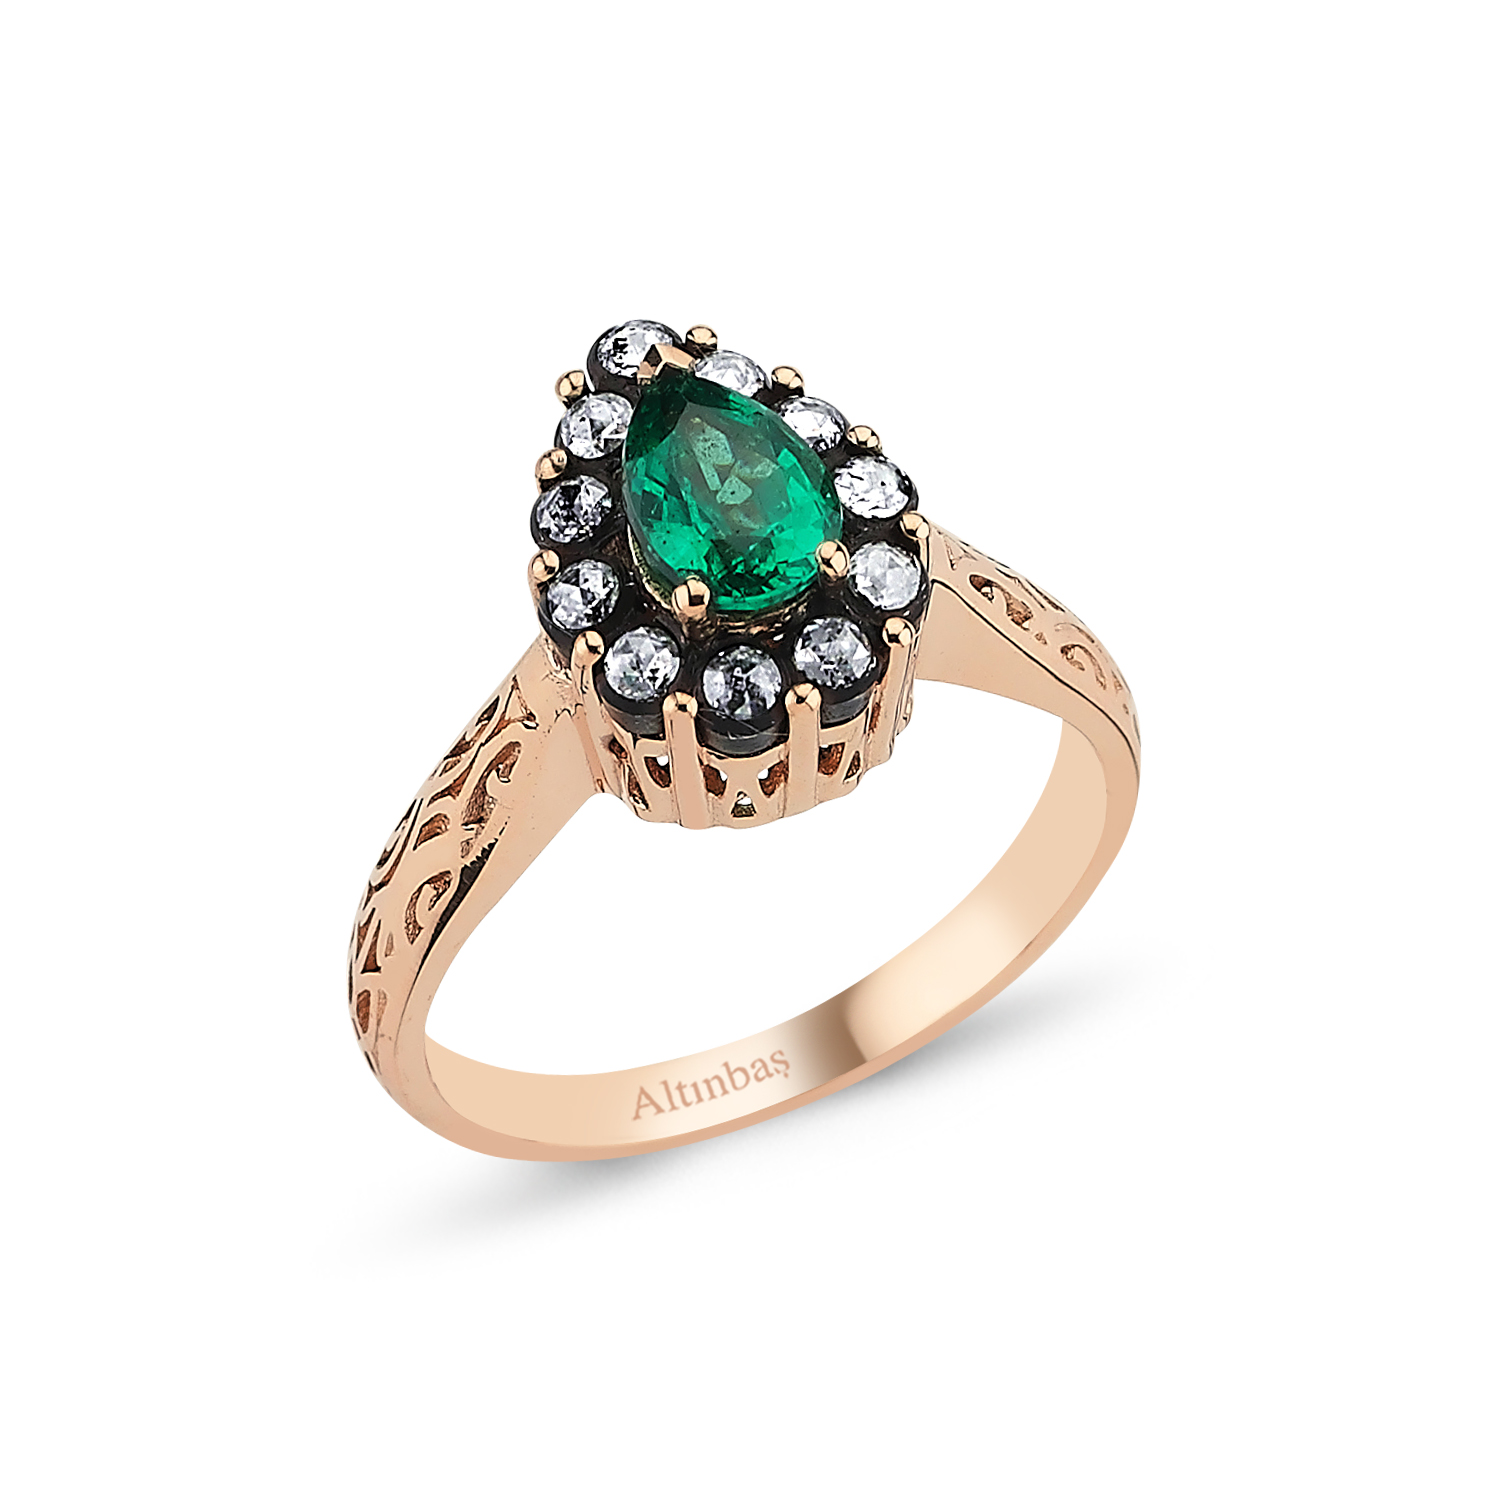 0.20 Carat Emerald Diamond Ring